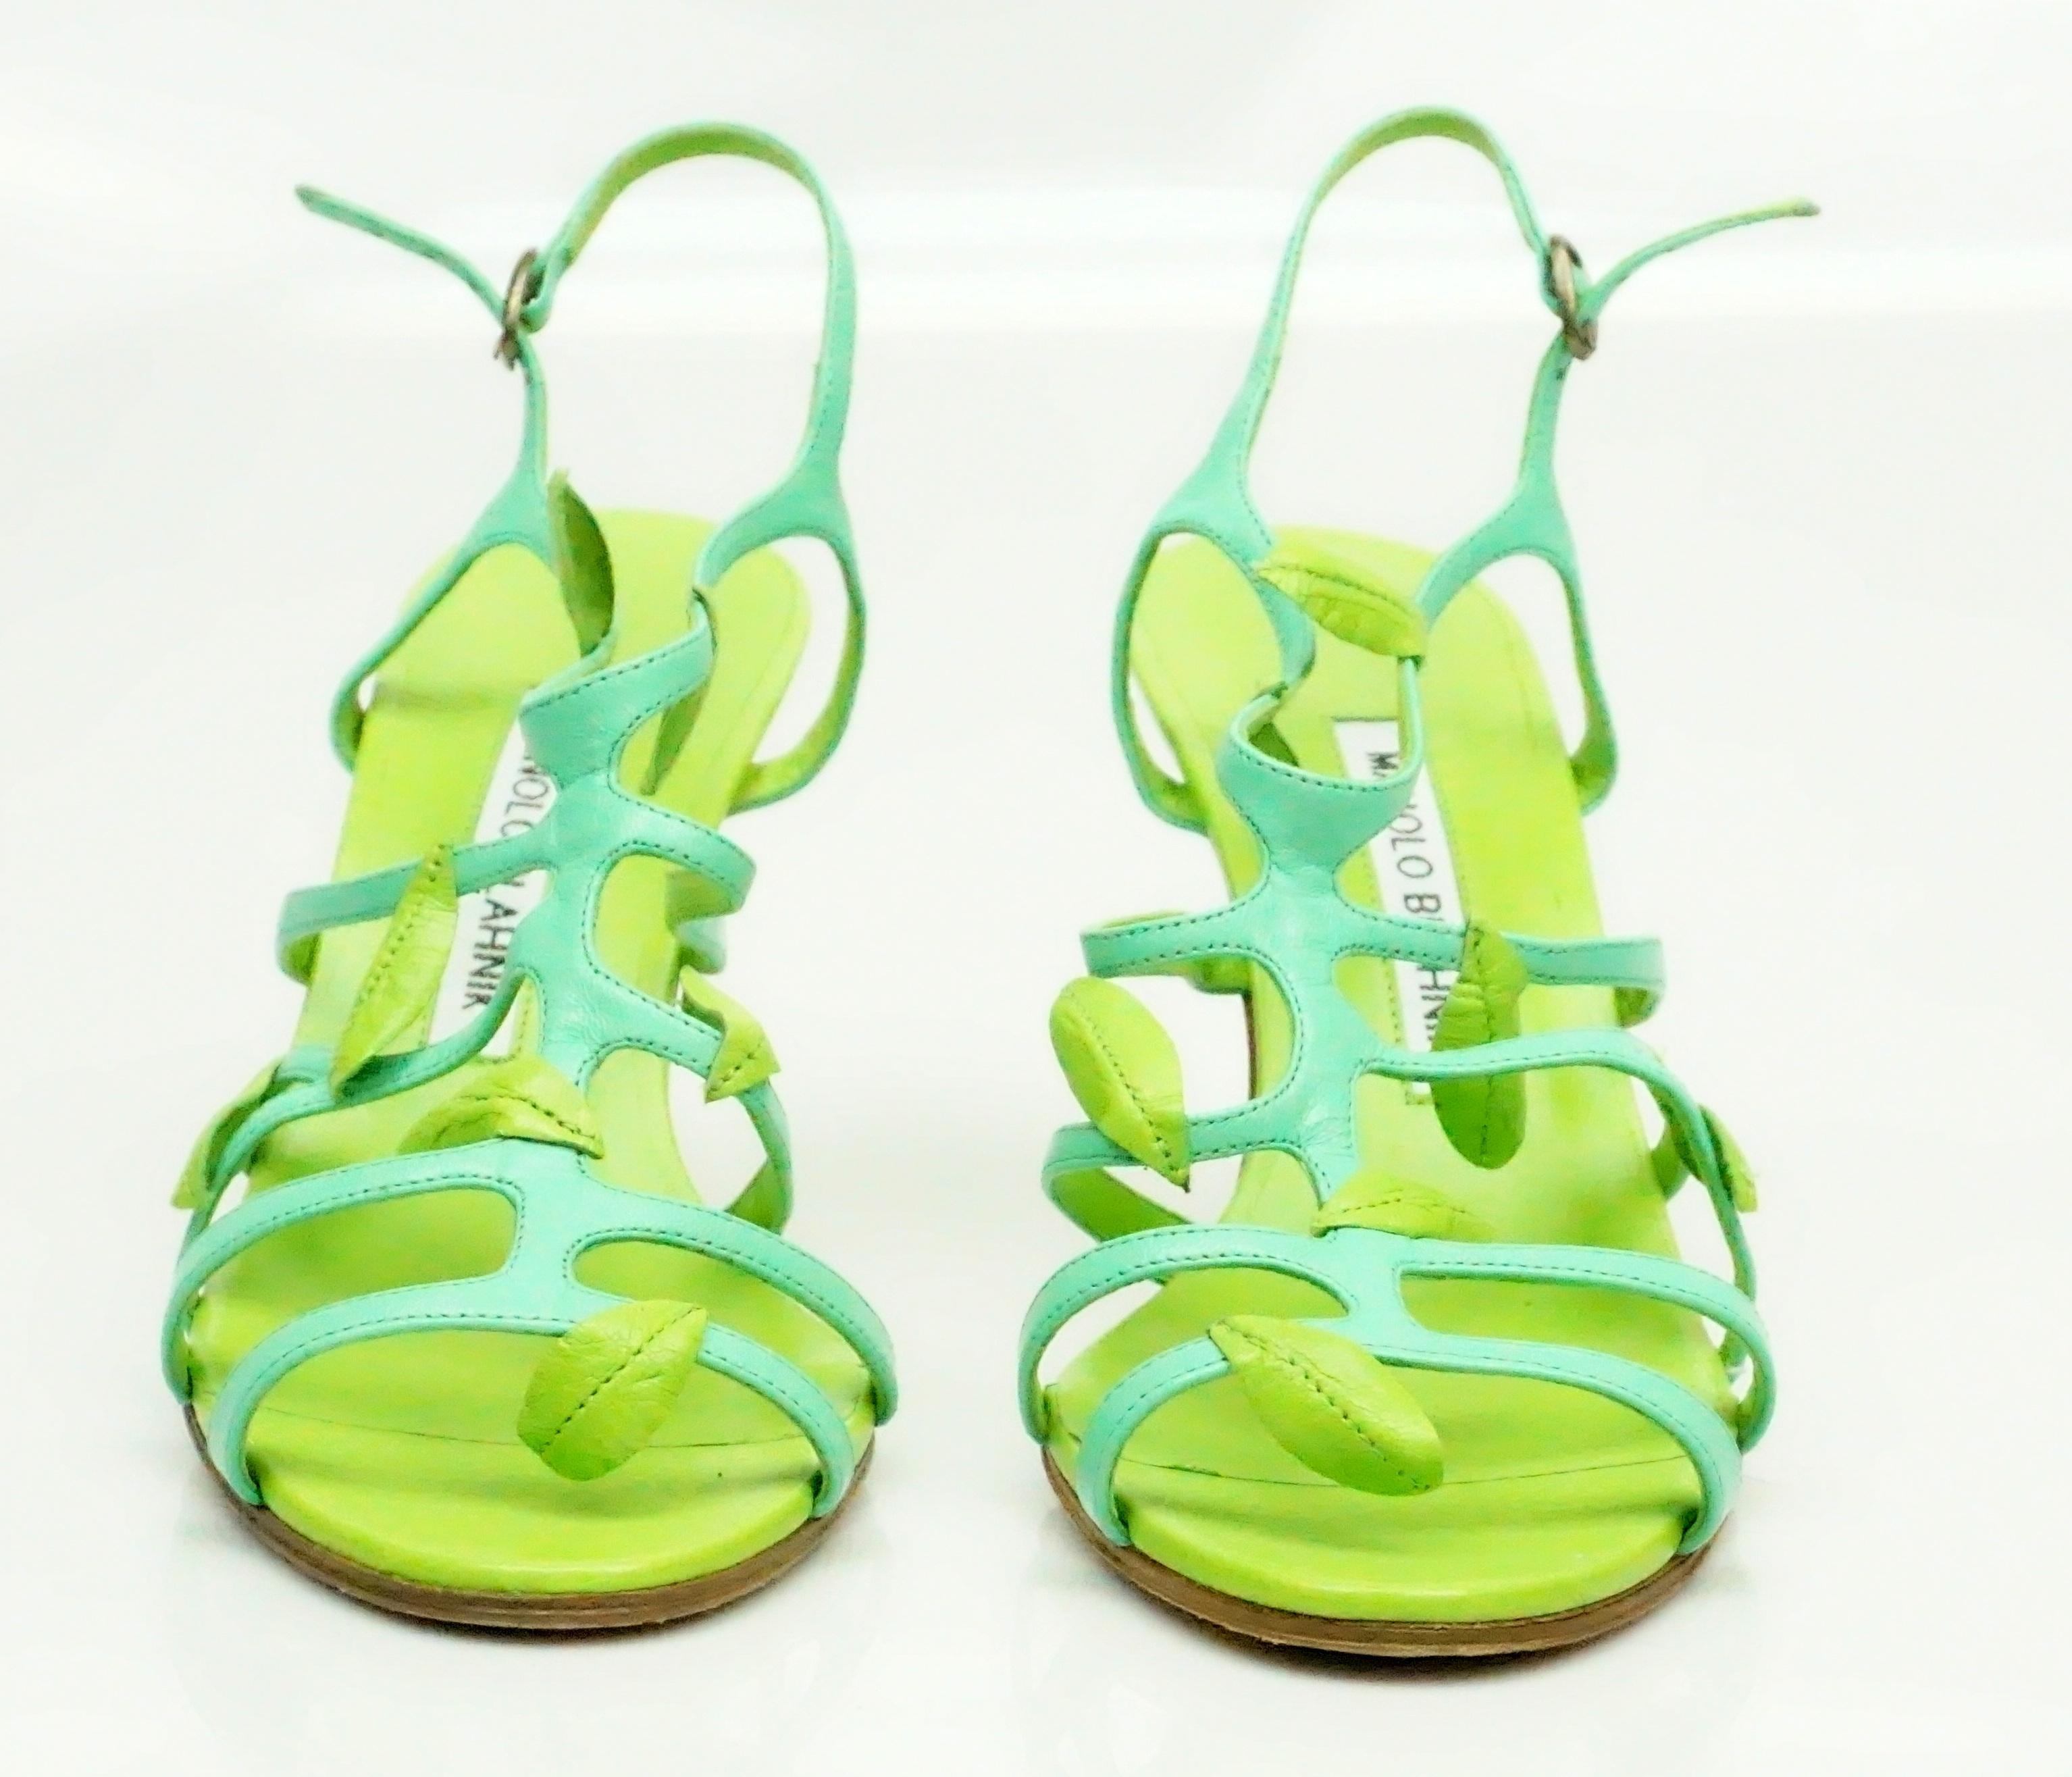 manolo blahnik green heels